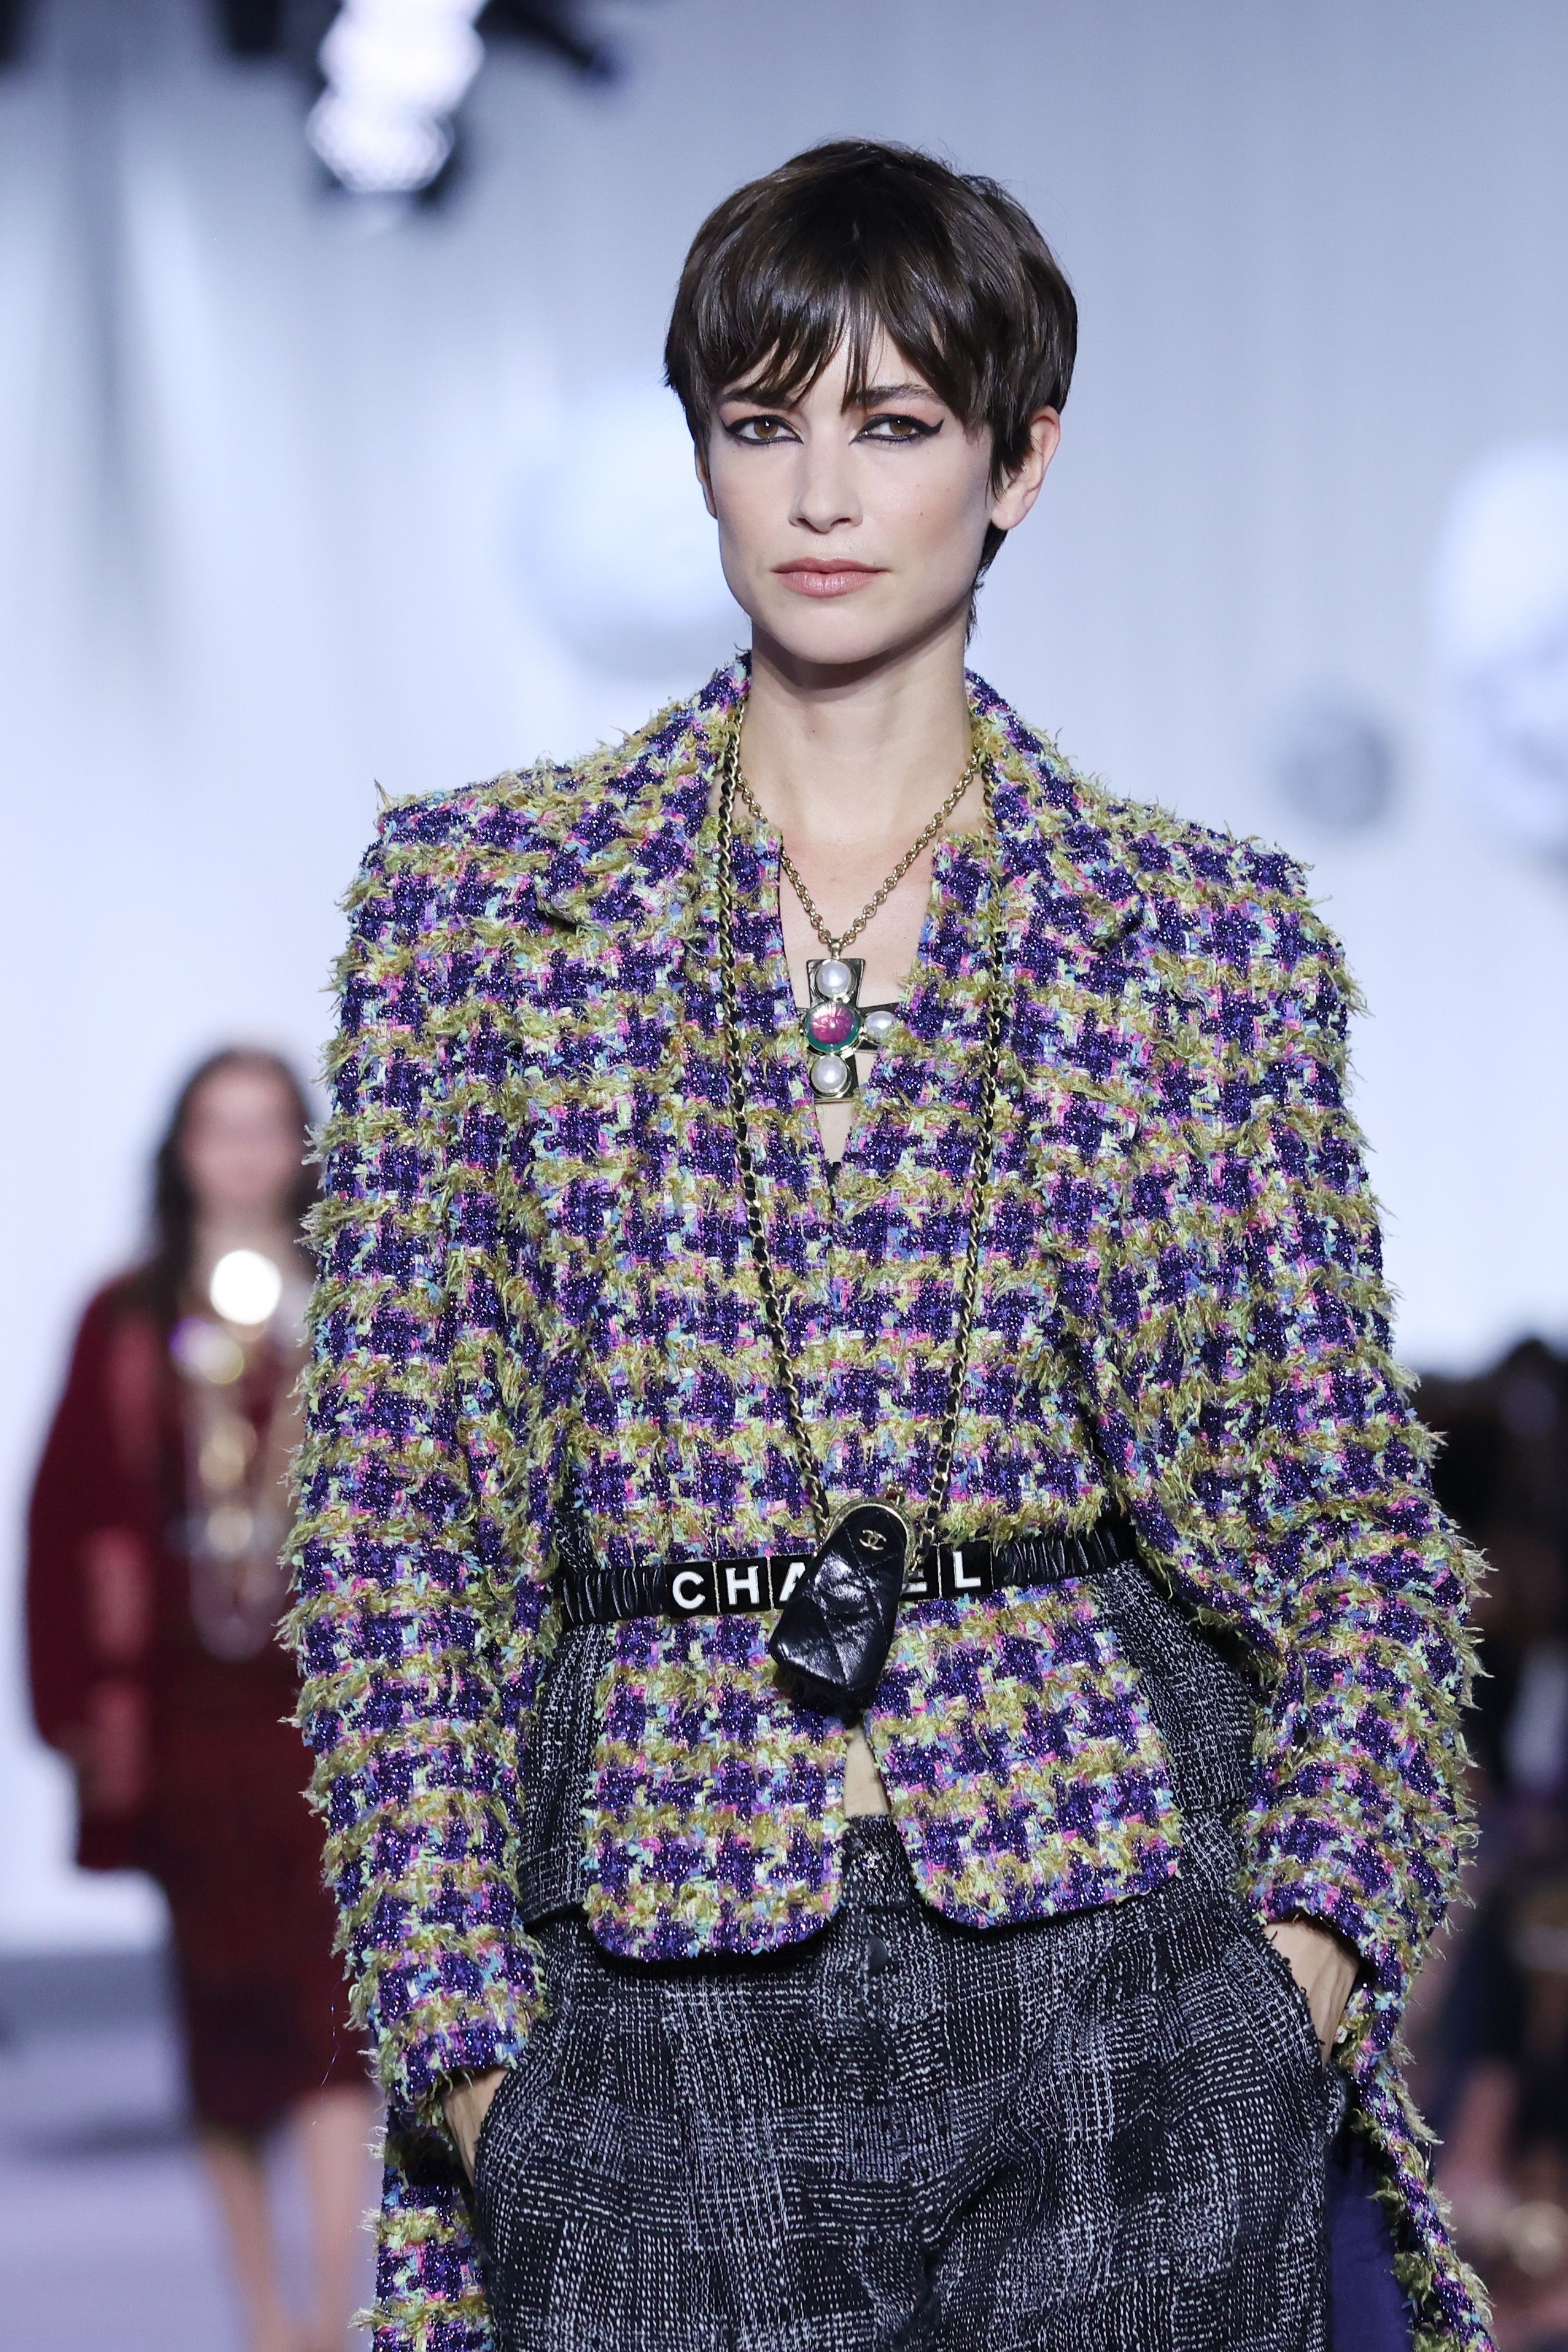 Moda 2022: le tendenze dalla sfilata Chanel Metiérs d'art a Firenze